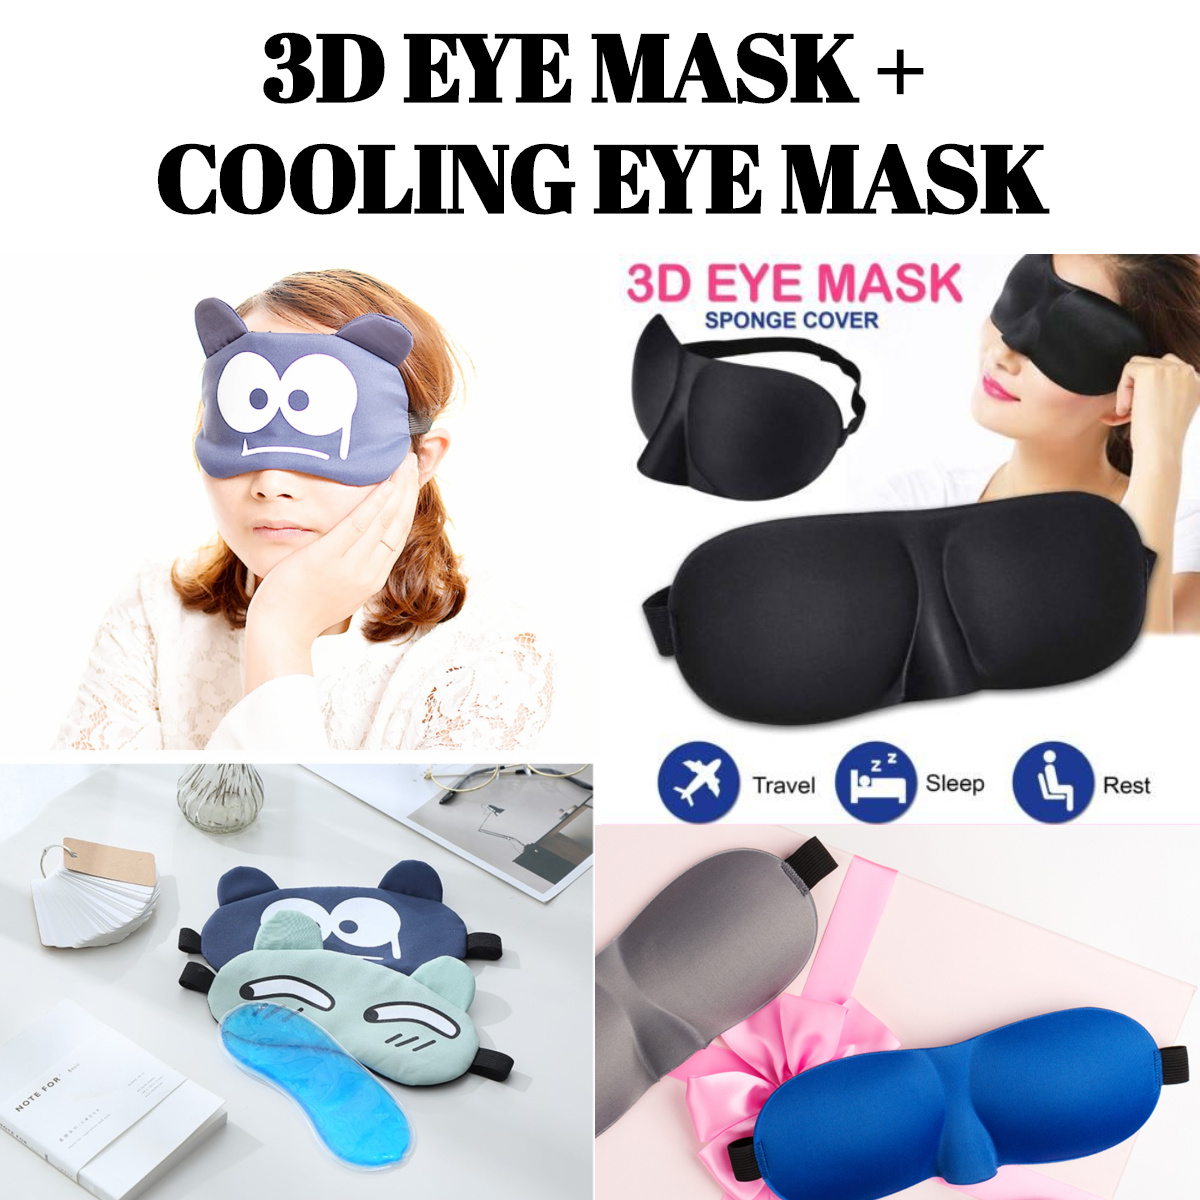 cooling eye mask for sleeping